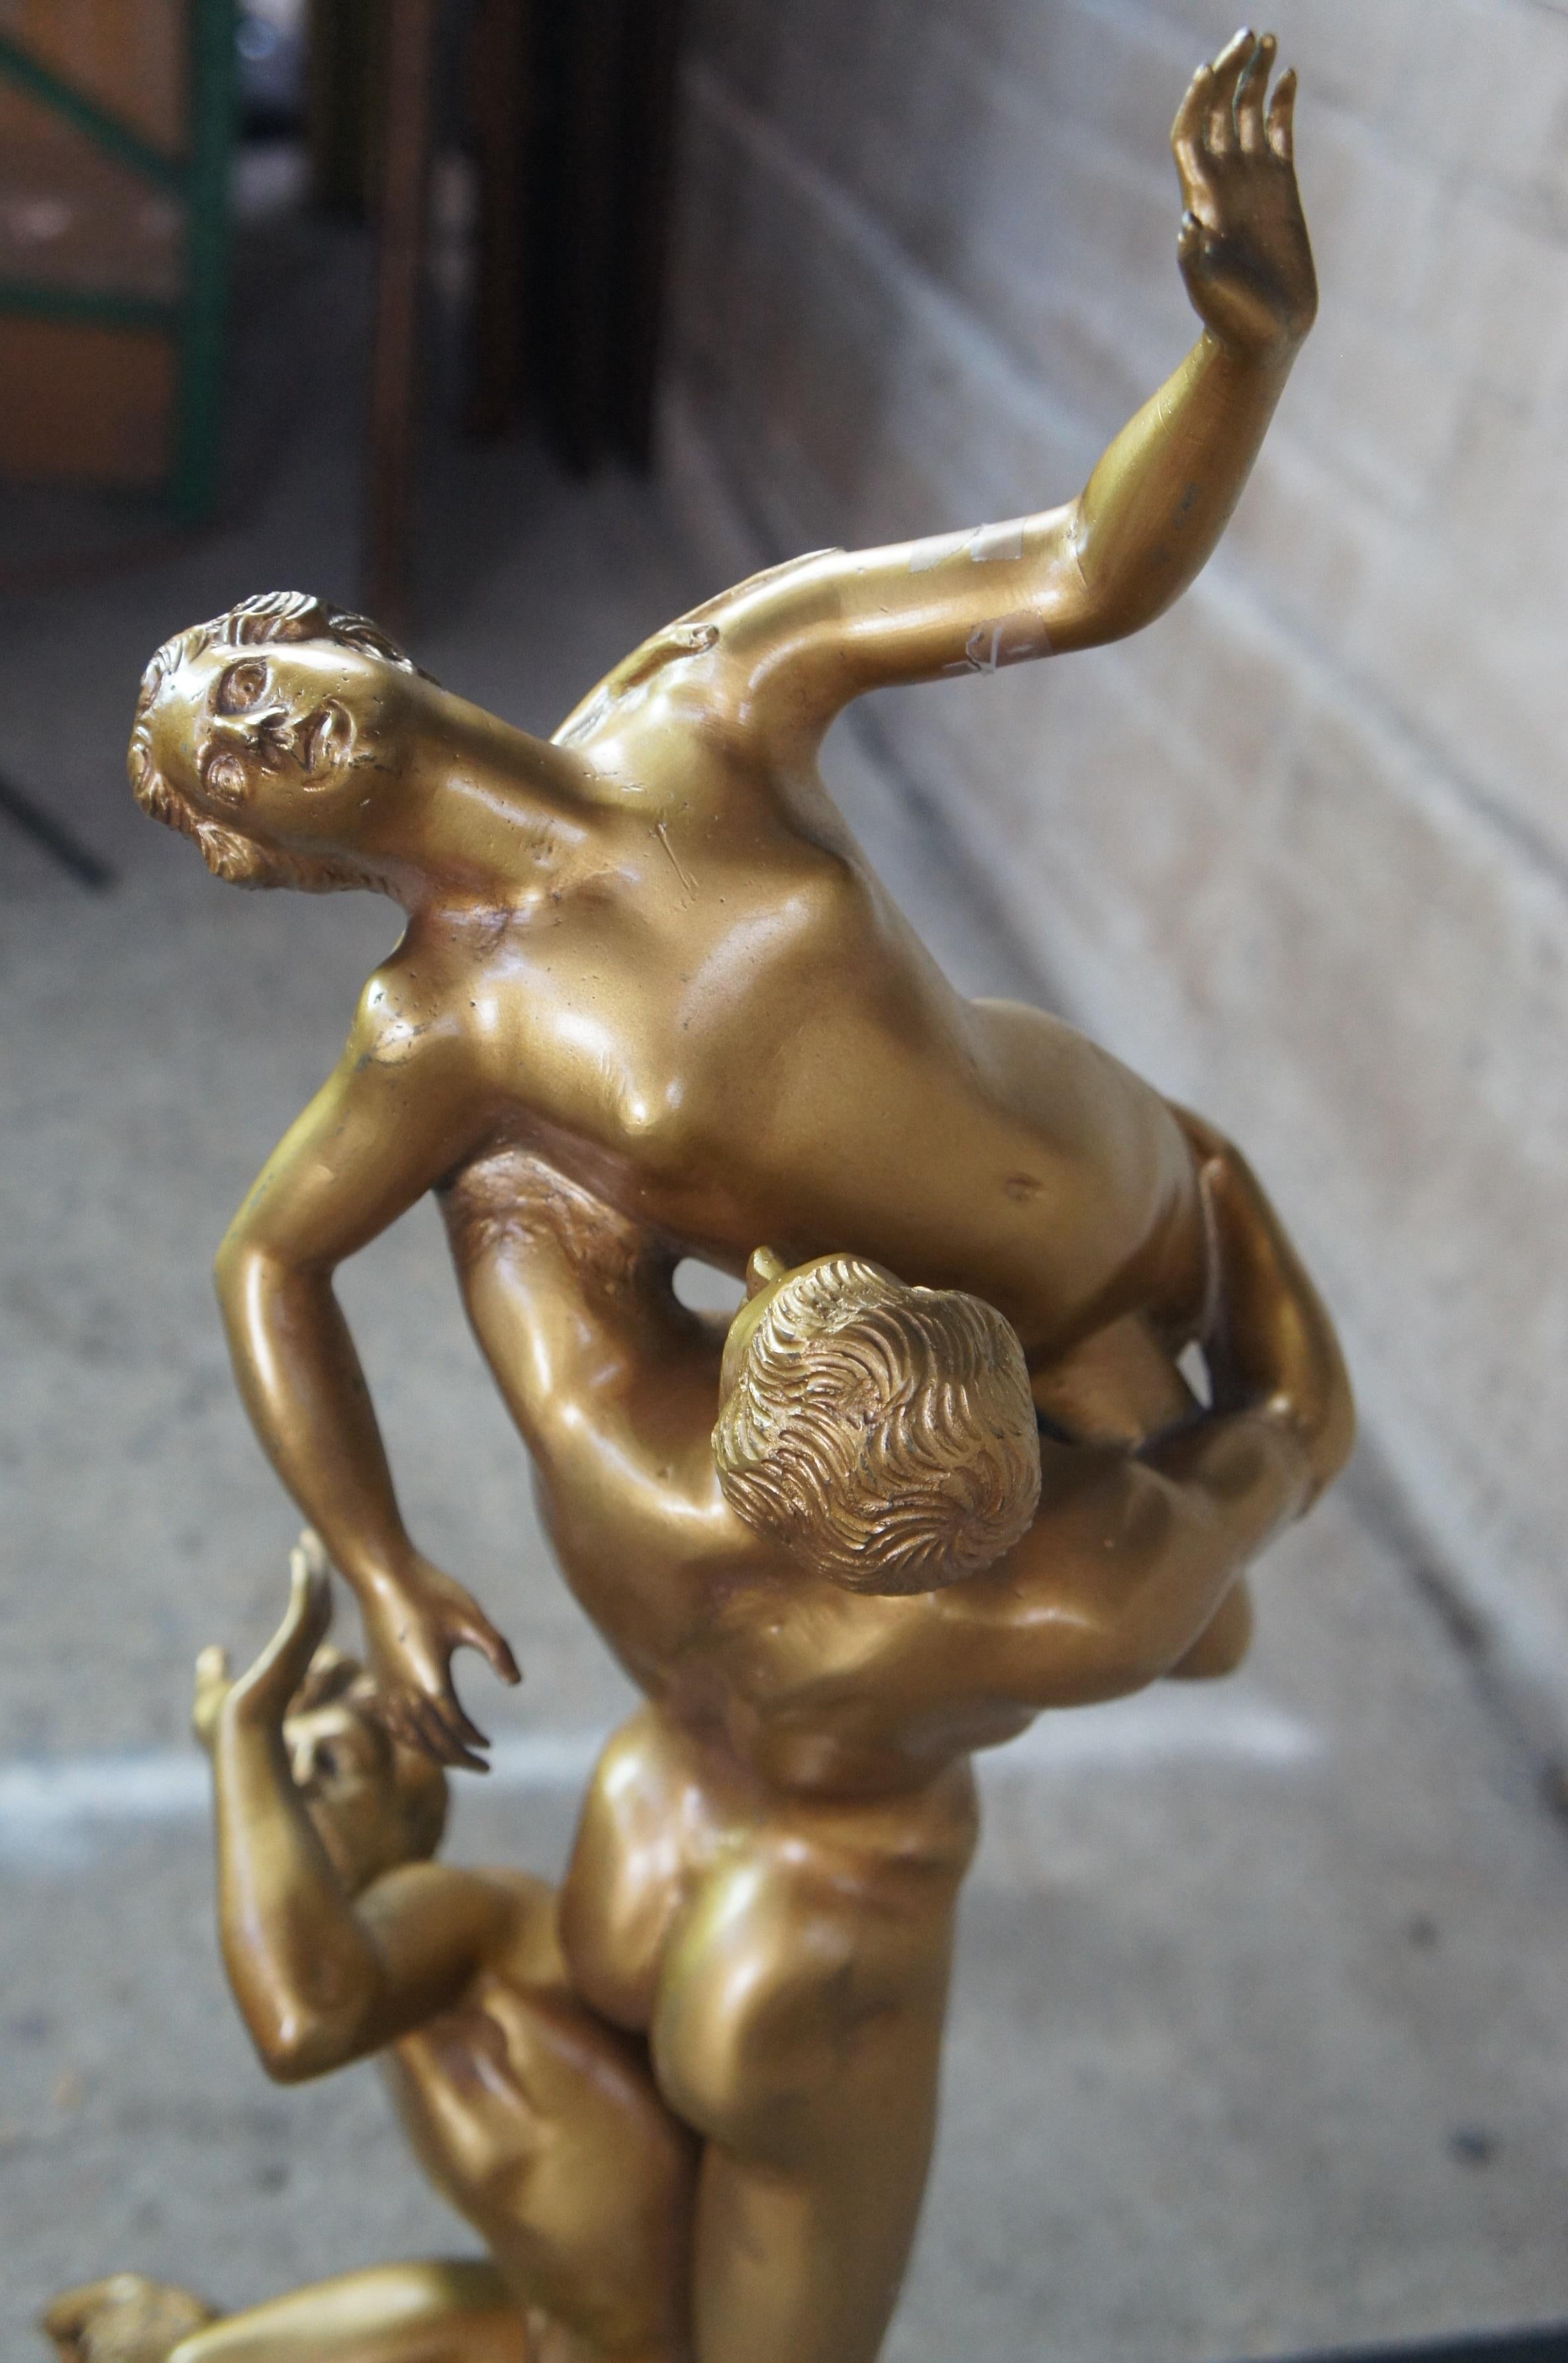 2 Monumental Renaissance Revival Sculptural Bronze Andirons After Giambologna For Sale 2